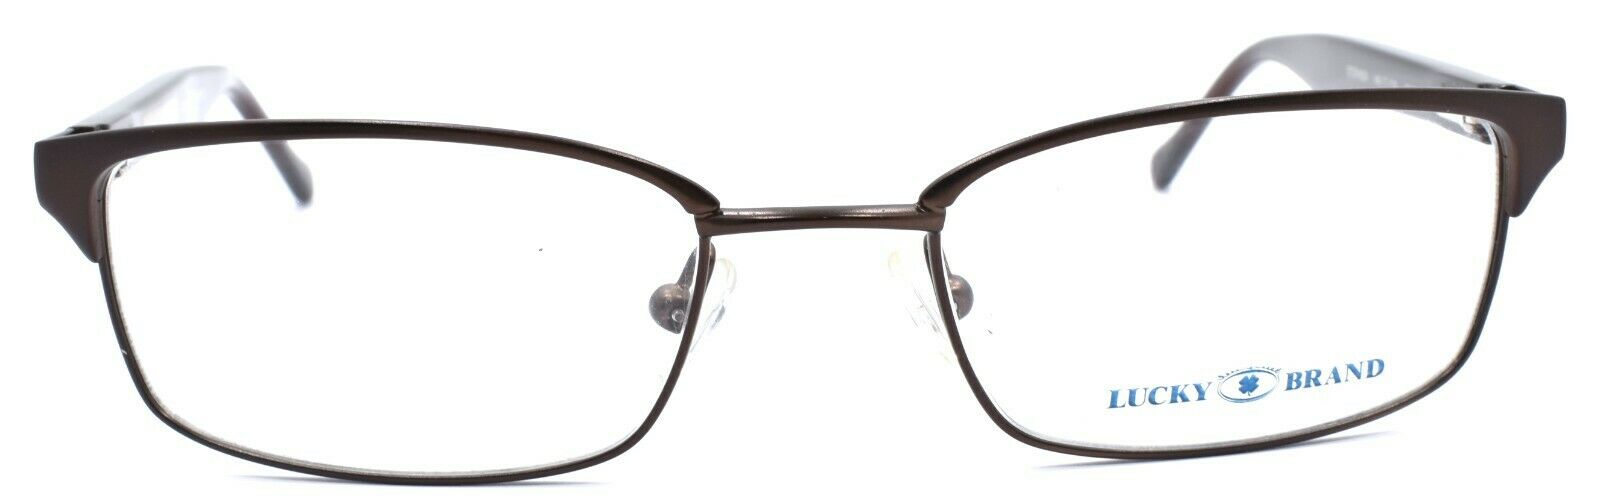 2-LUCKY BRAND Stephen Kids Boys Eyeglasses Frames 48-17-130 Brown + CASE-751286136340-IKSpecs